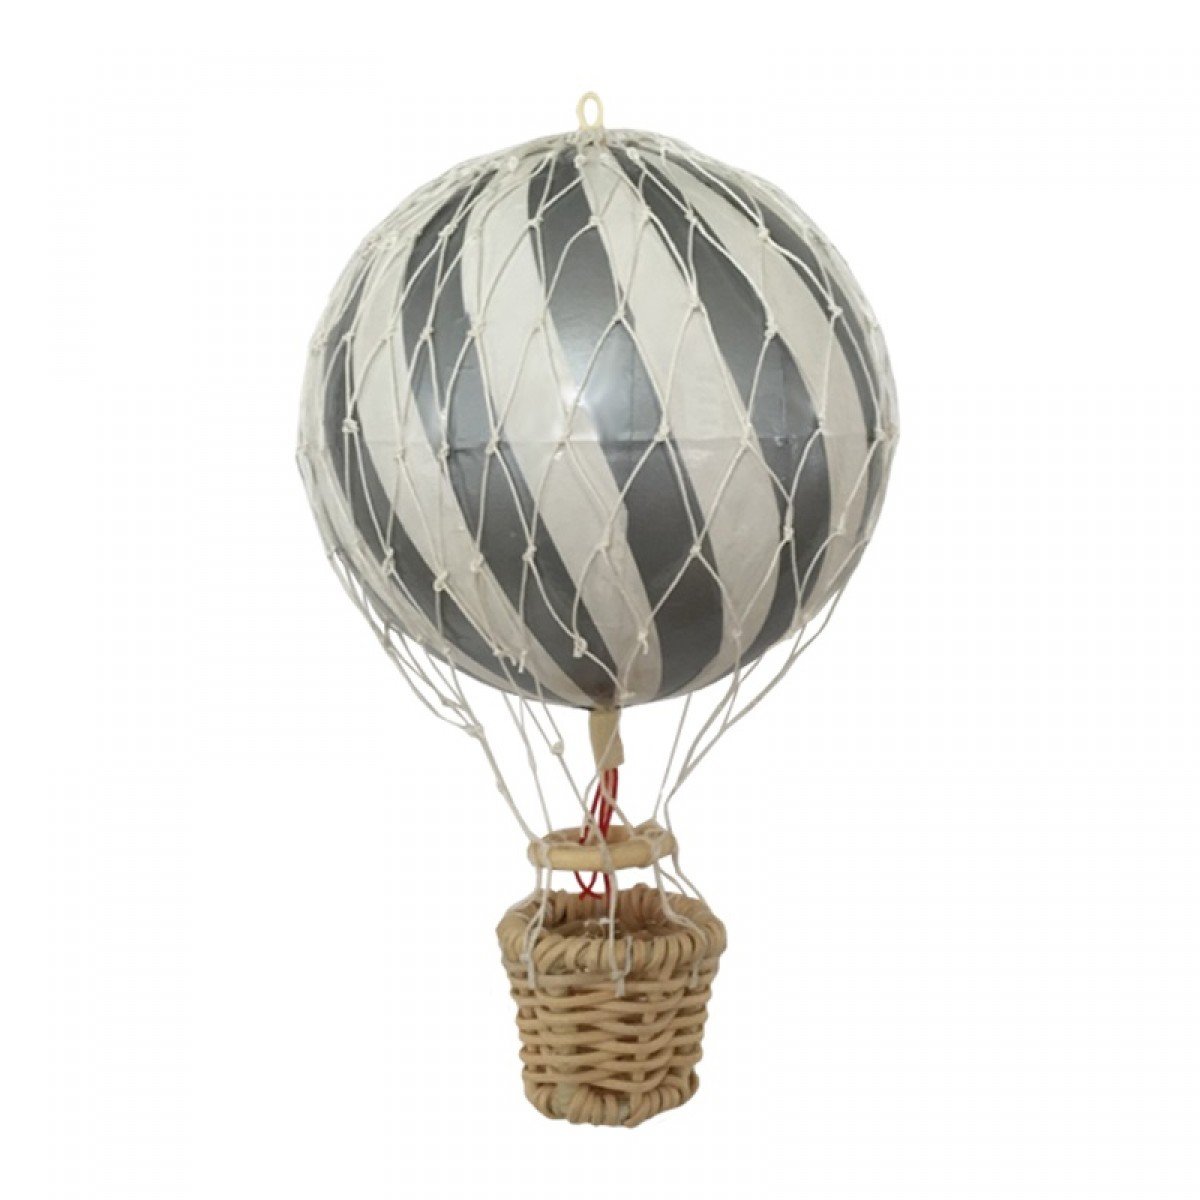 Шаре булит. Декоративный воздушный шар. Корзинка для воздушного шара. Игрушечный воздушный шар с корзиной. Сетка для воздушного шара.